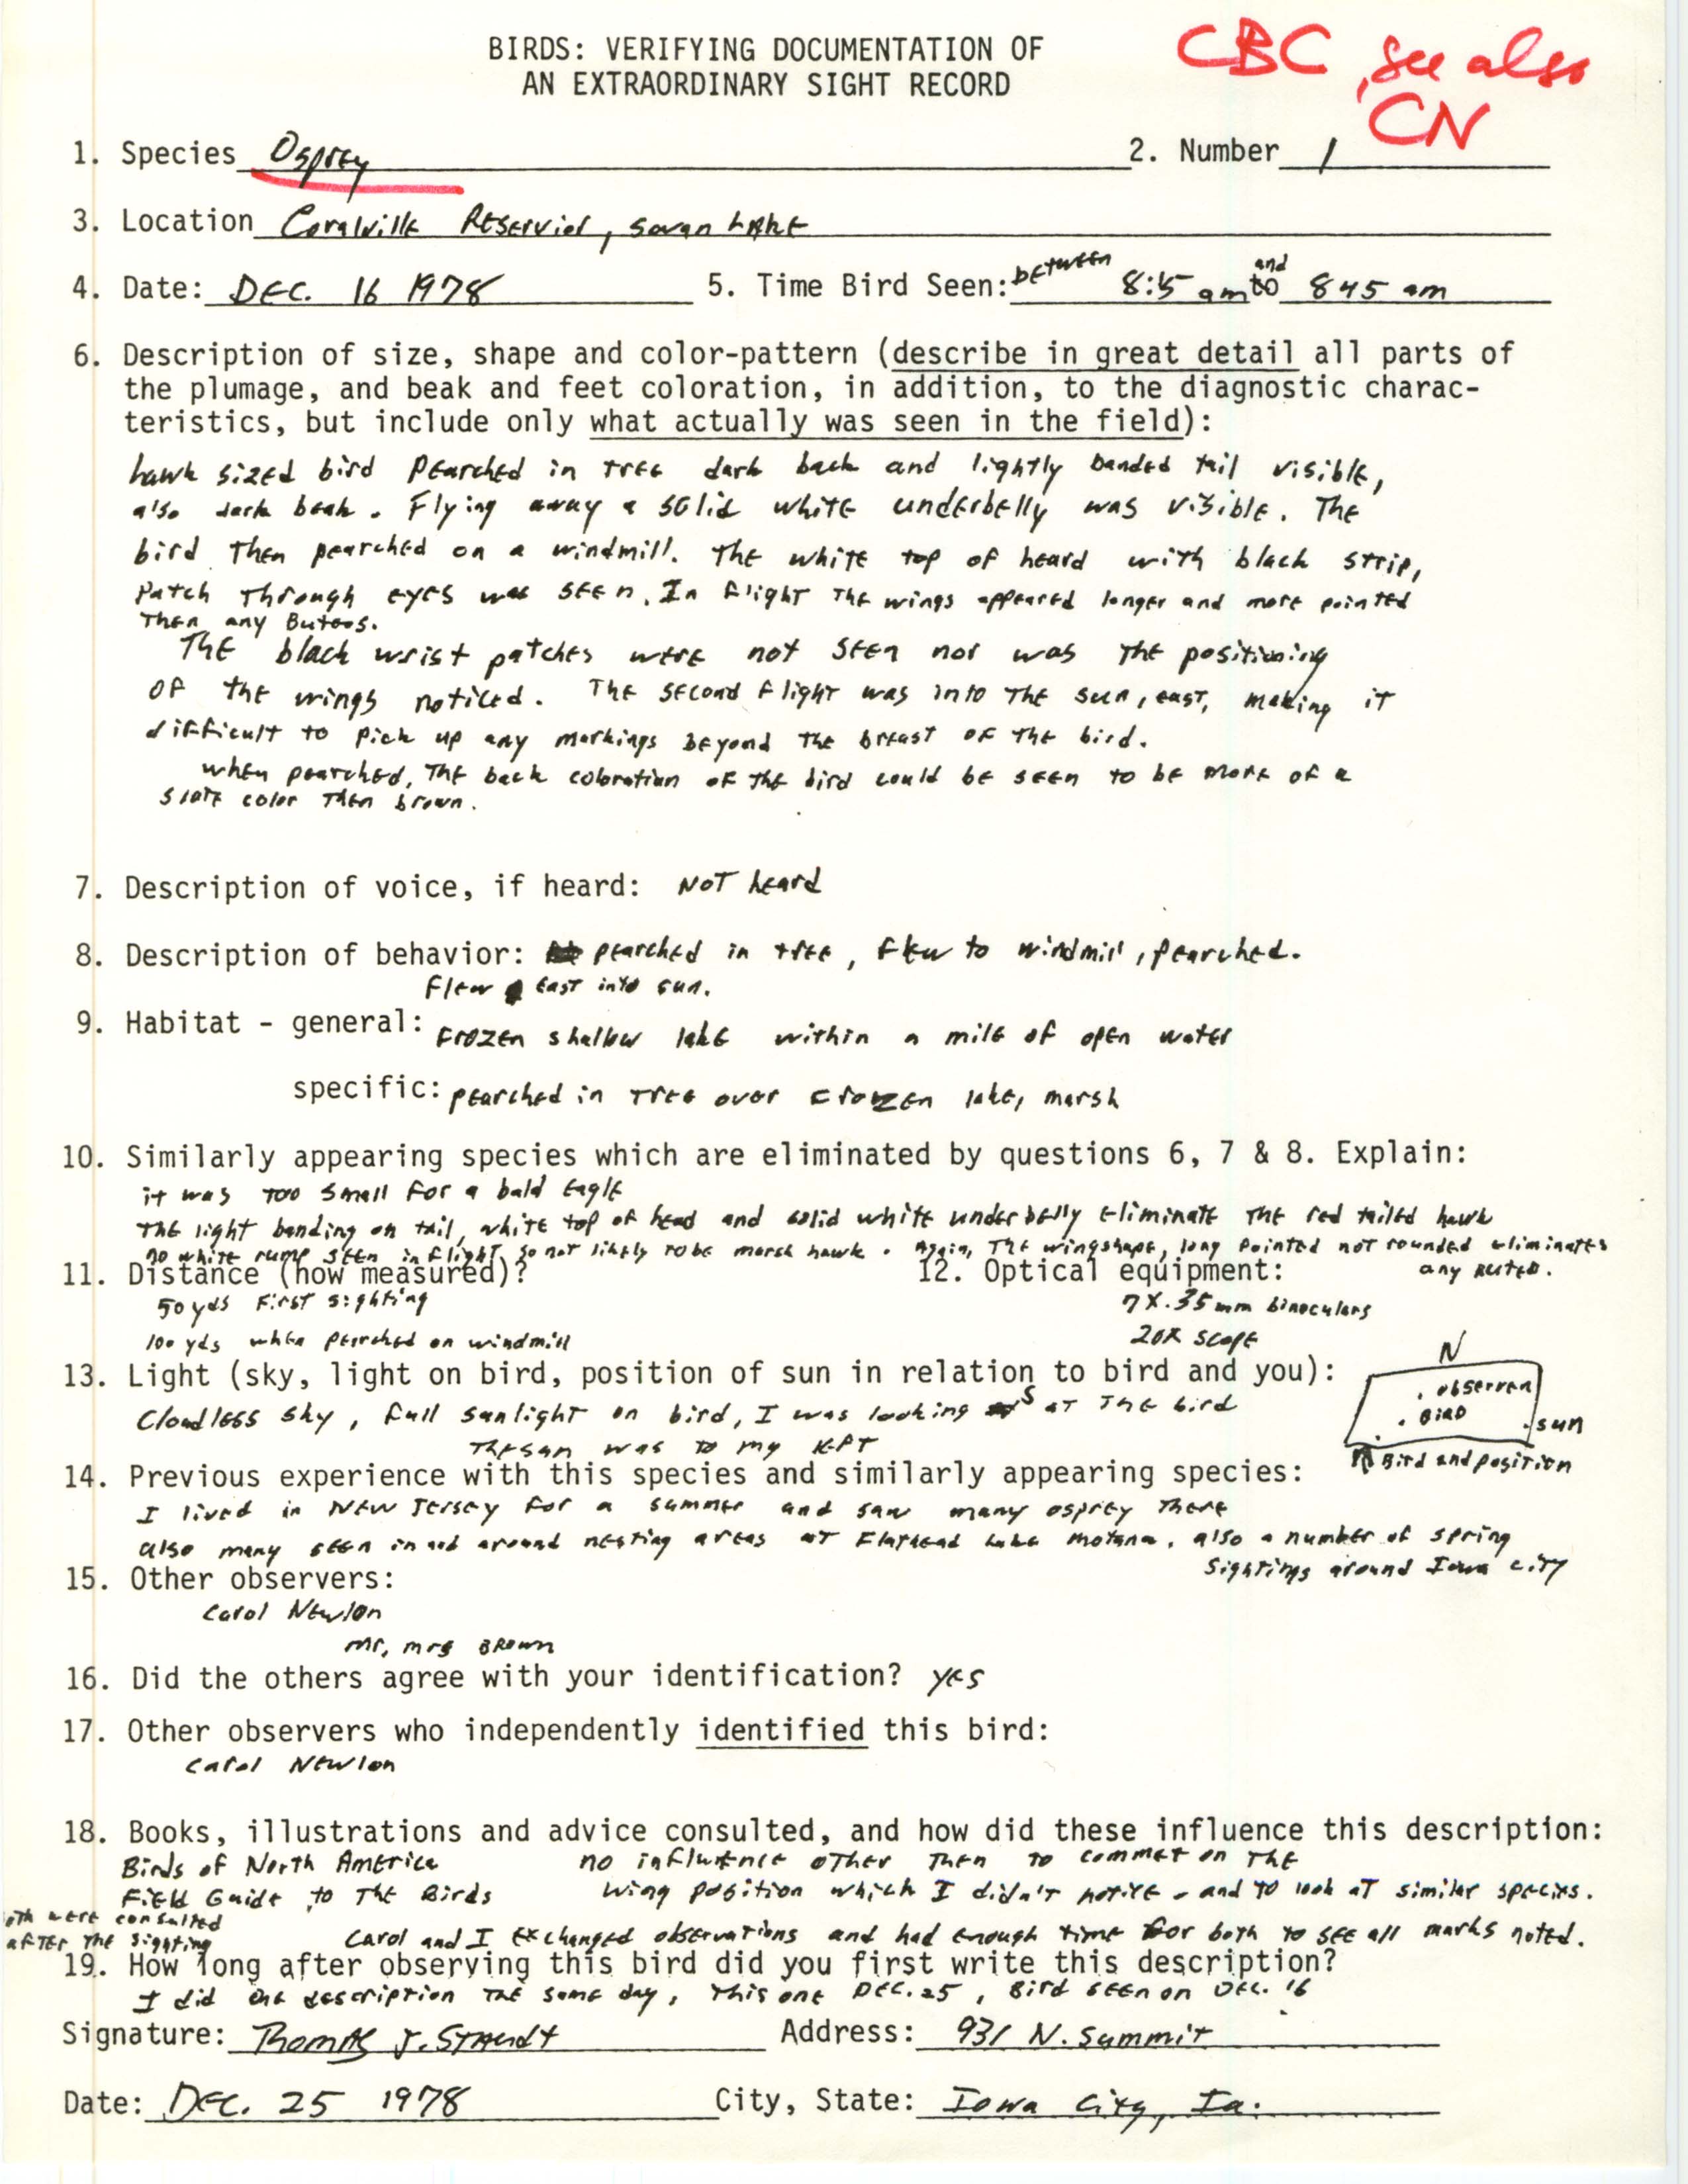 Rare bird documentation form for Osprey at Coralville Reservoir, 1978